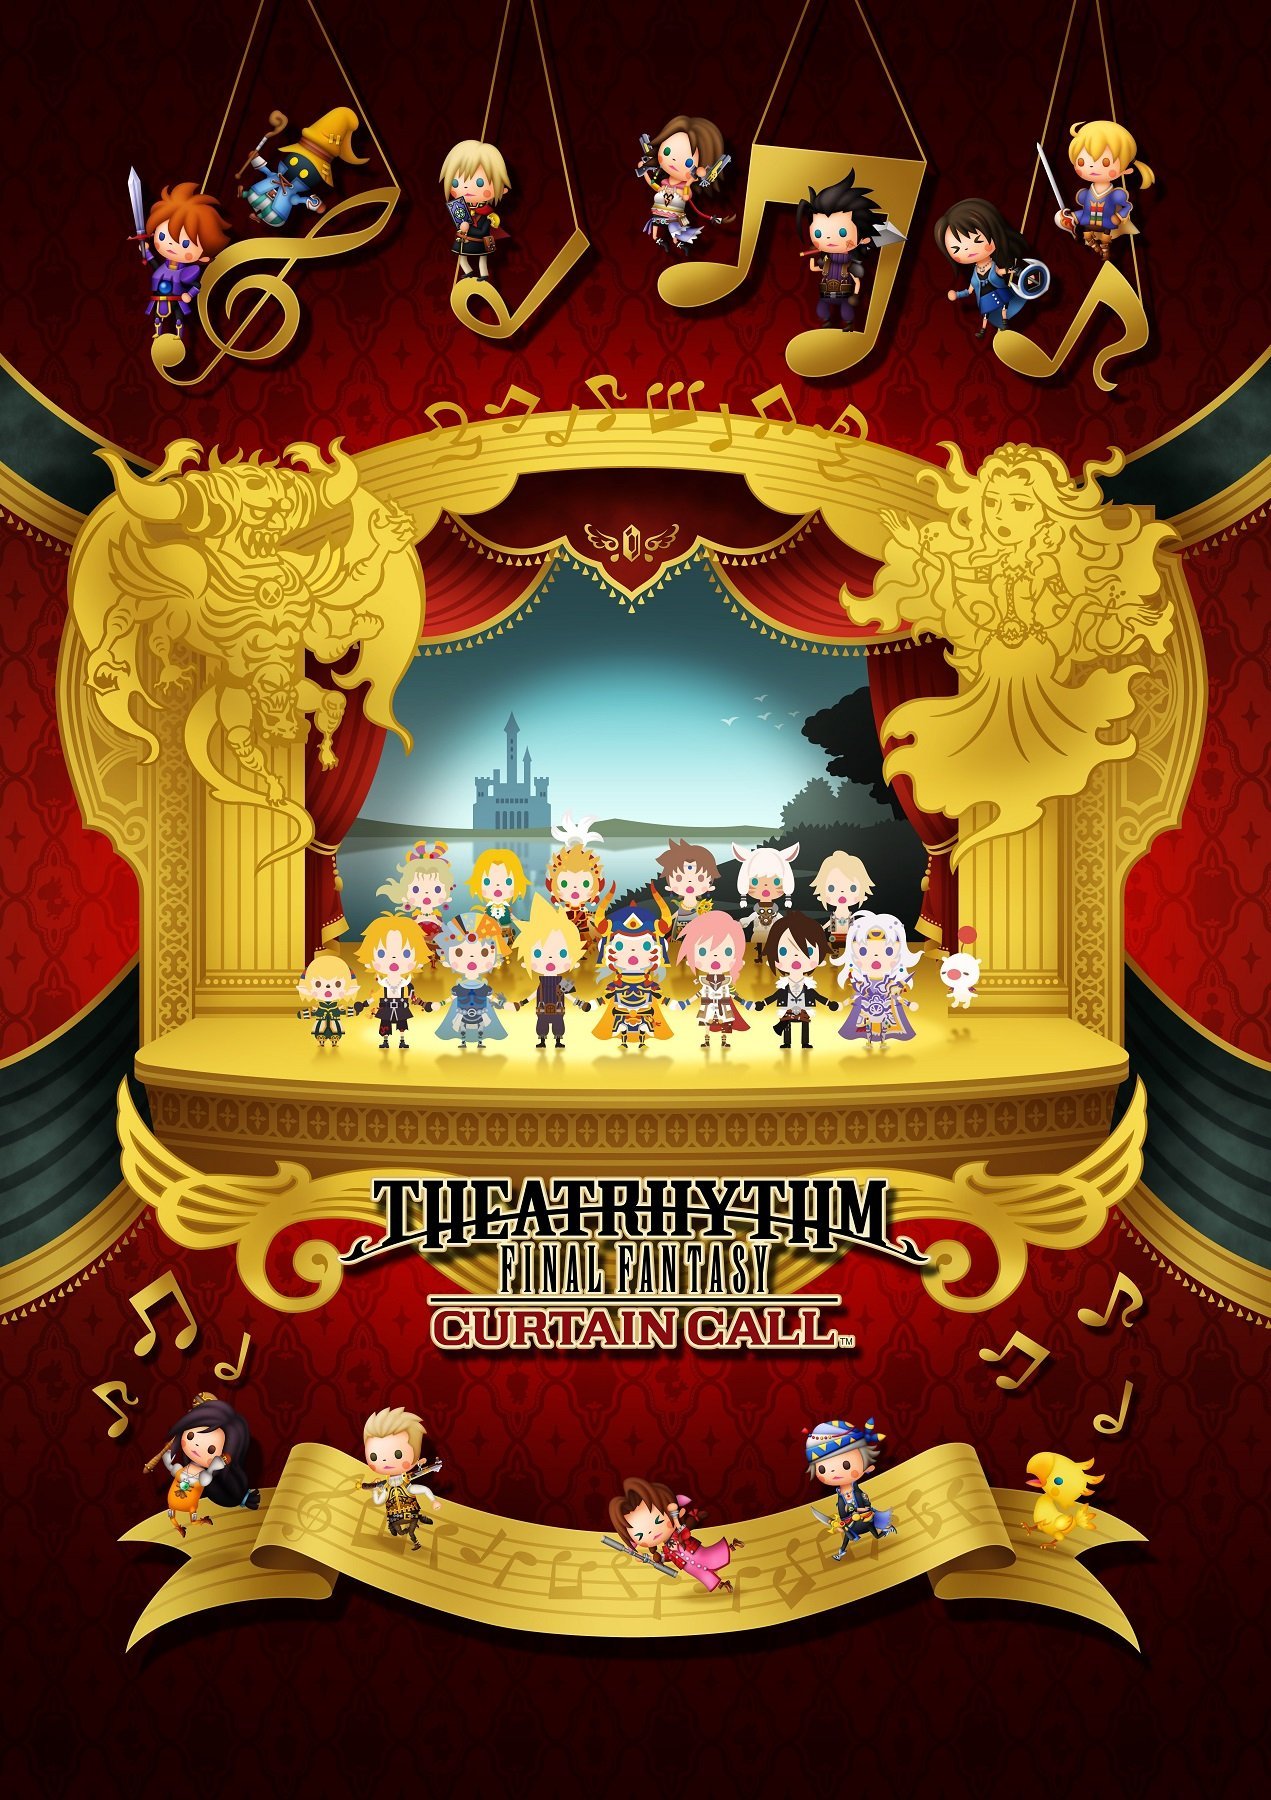 Image of Theatrhythm Final Fantasy: Curtain Call